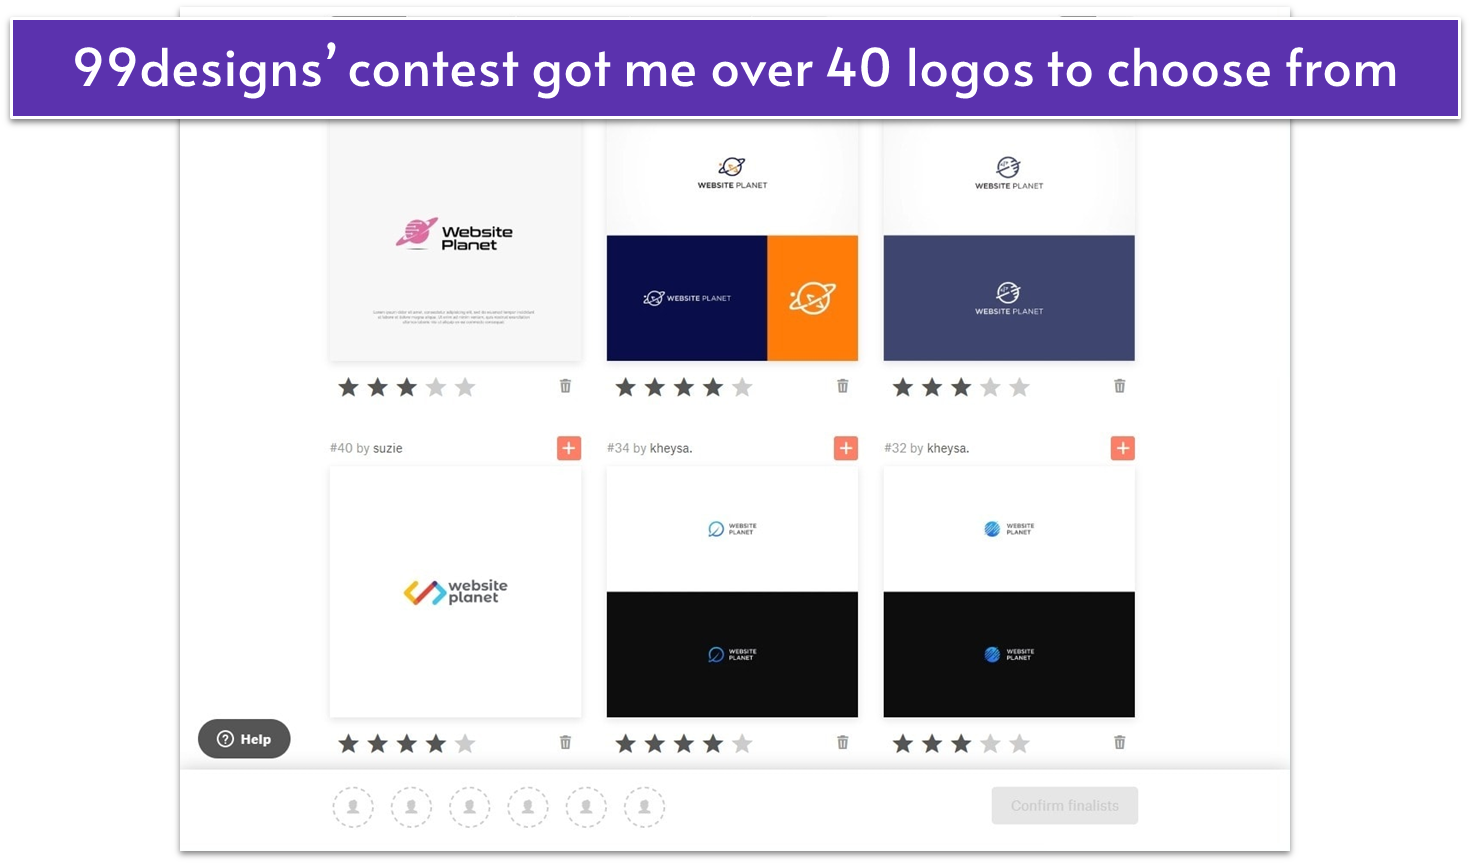 99designs’ logo samples